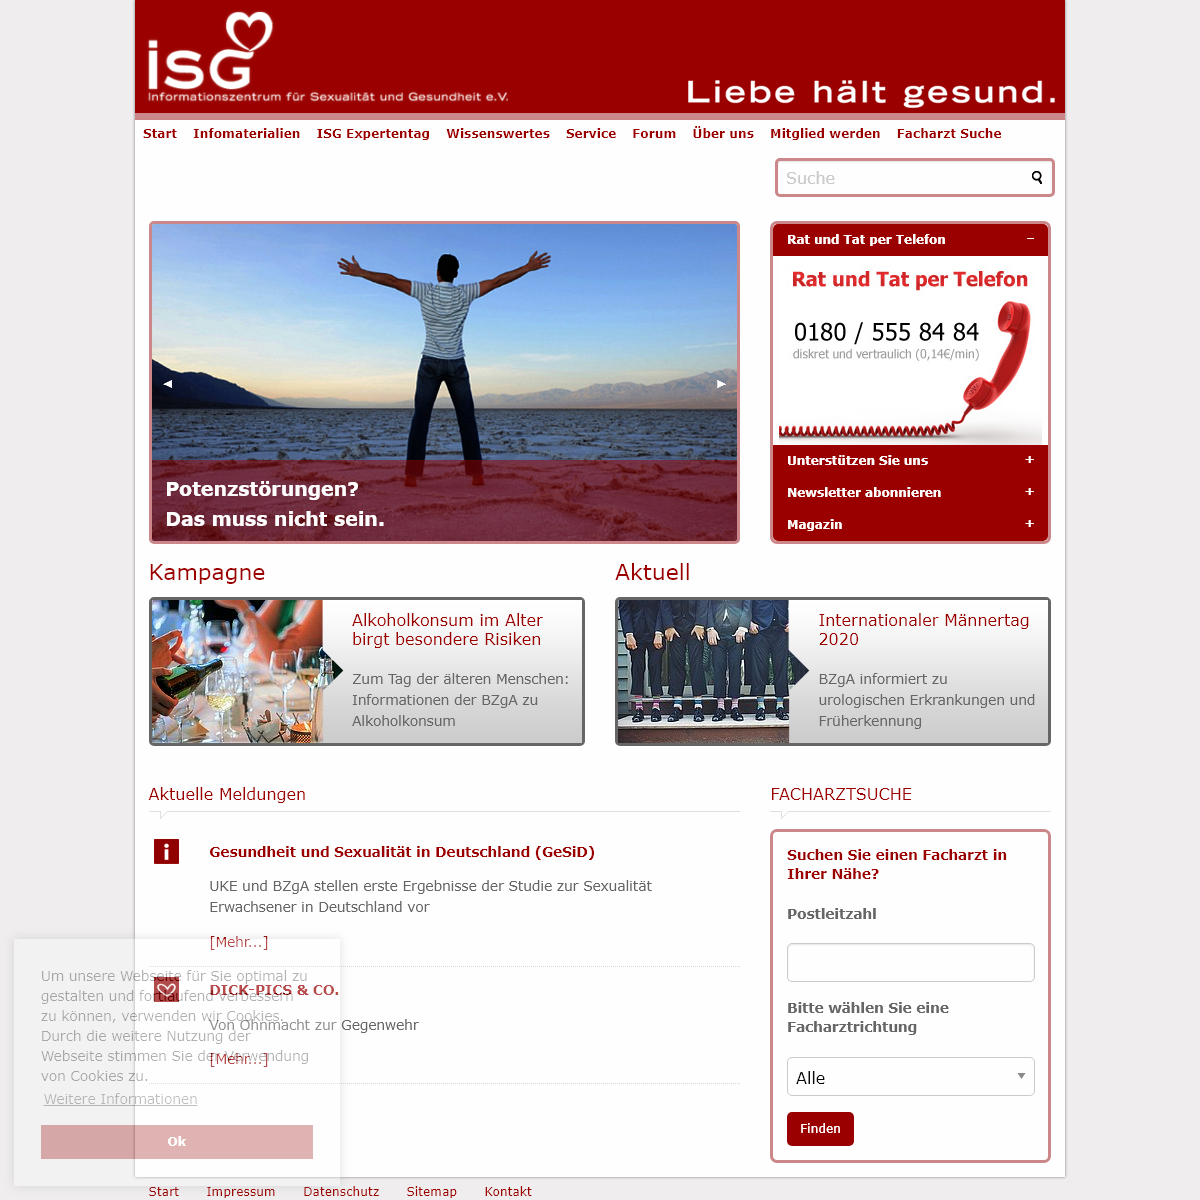 A complete backup of isg-info.de